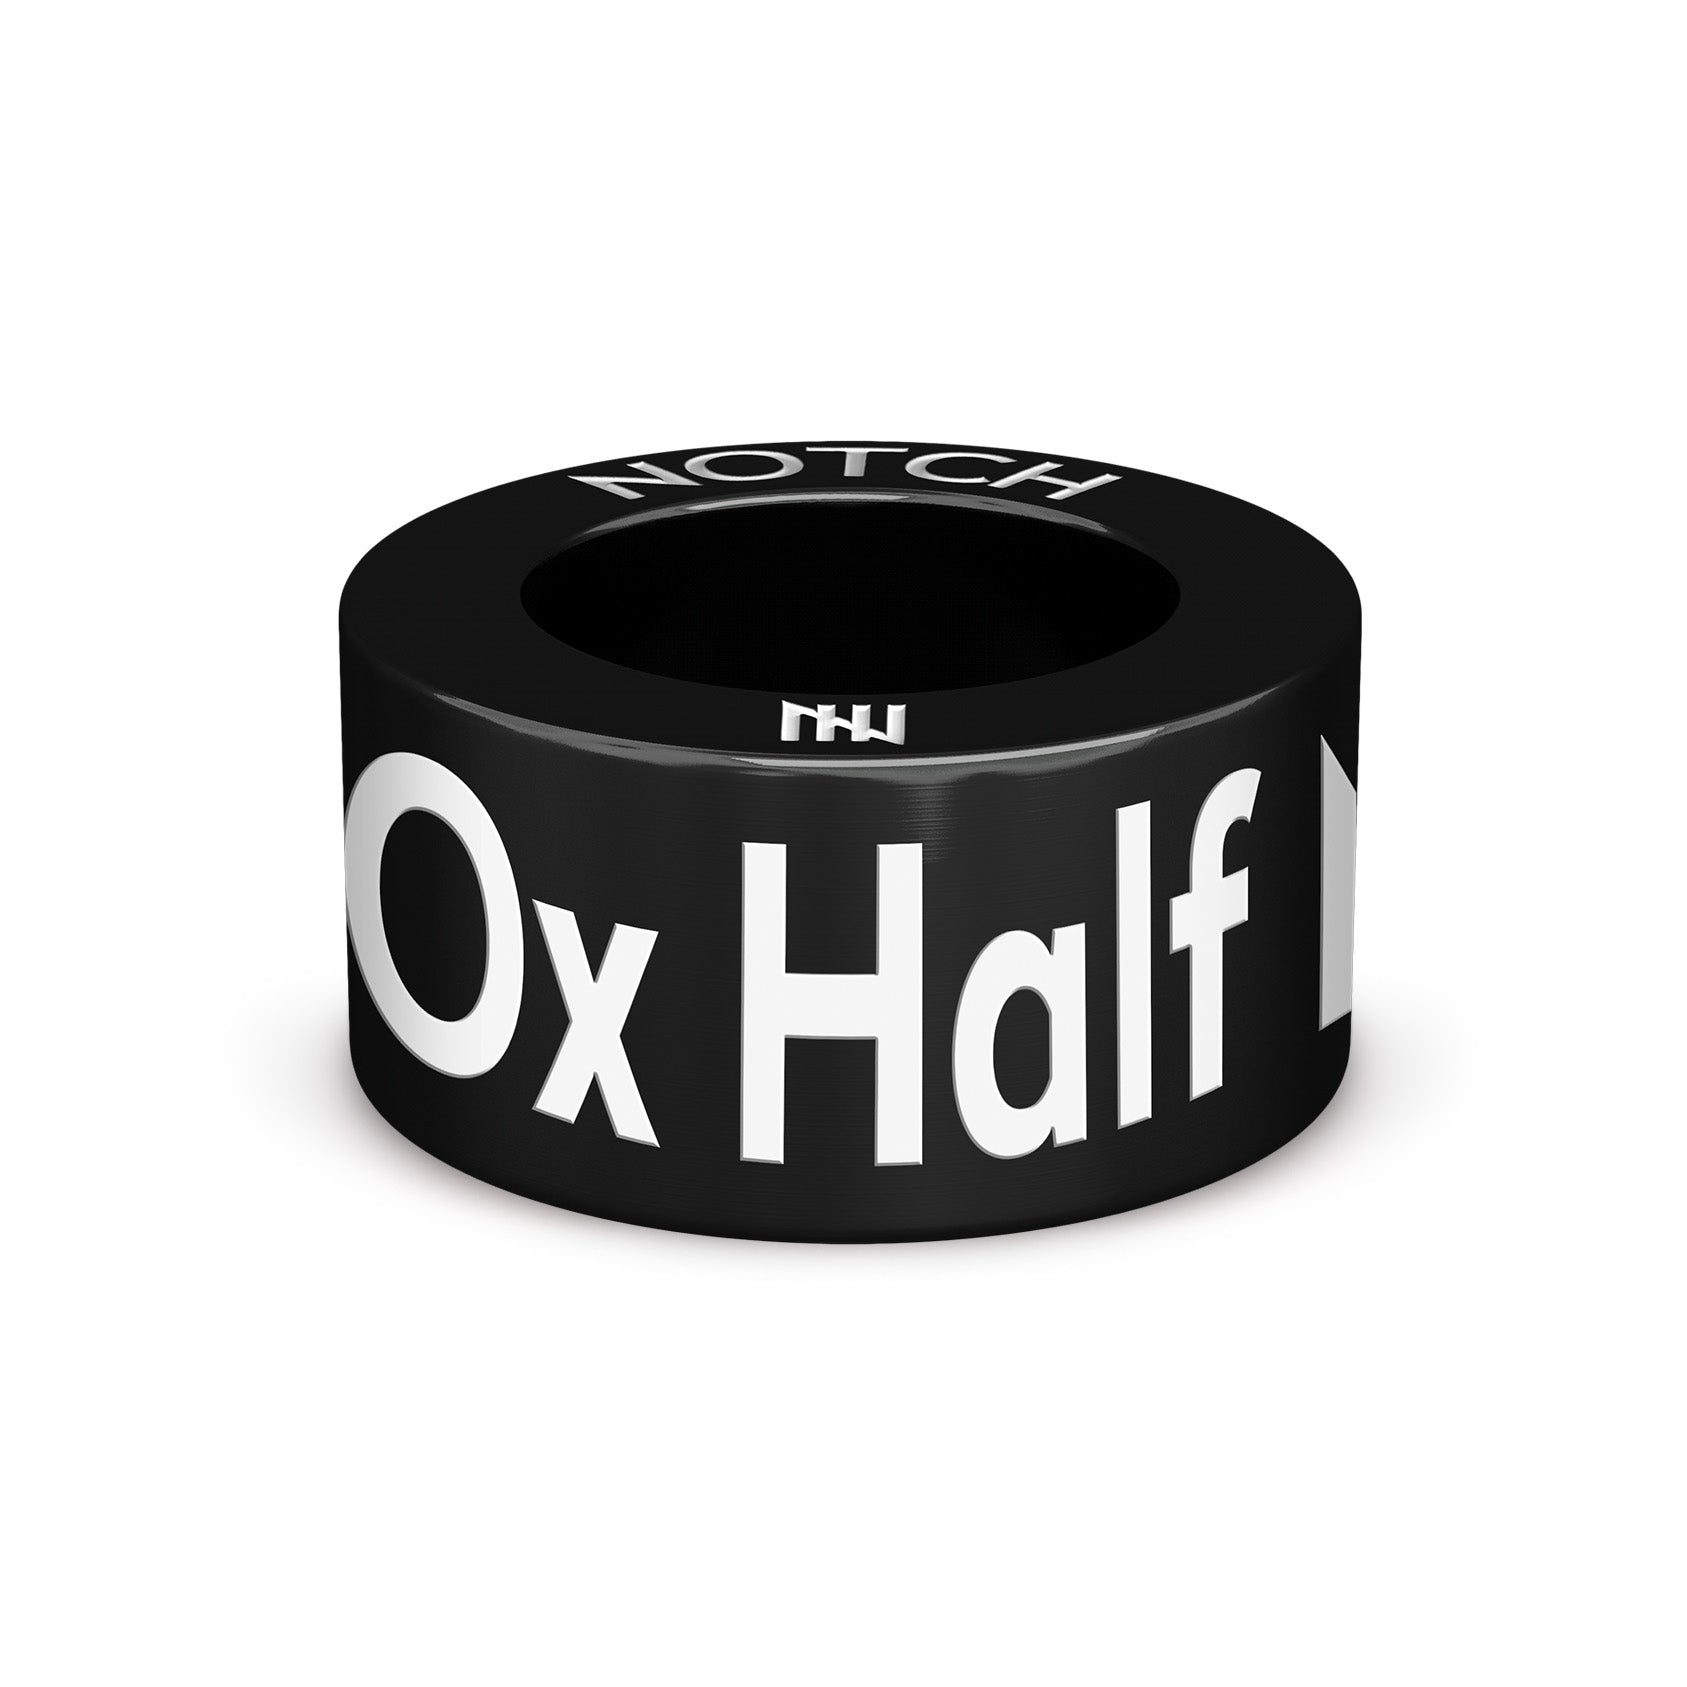 Ox Half Marathon NOTCH Charm